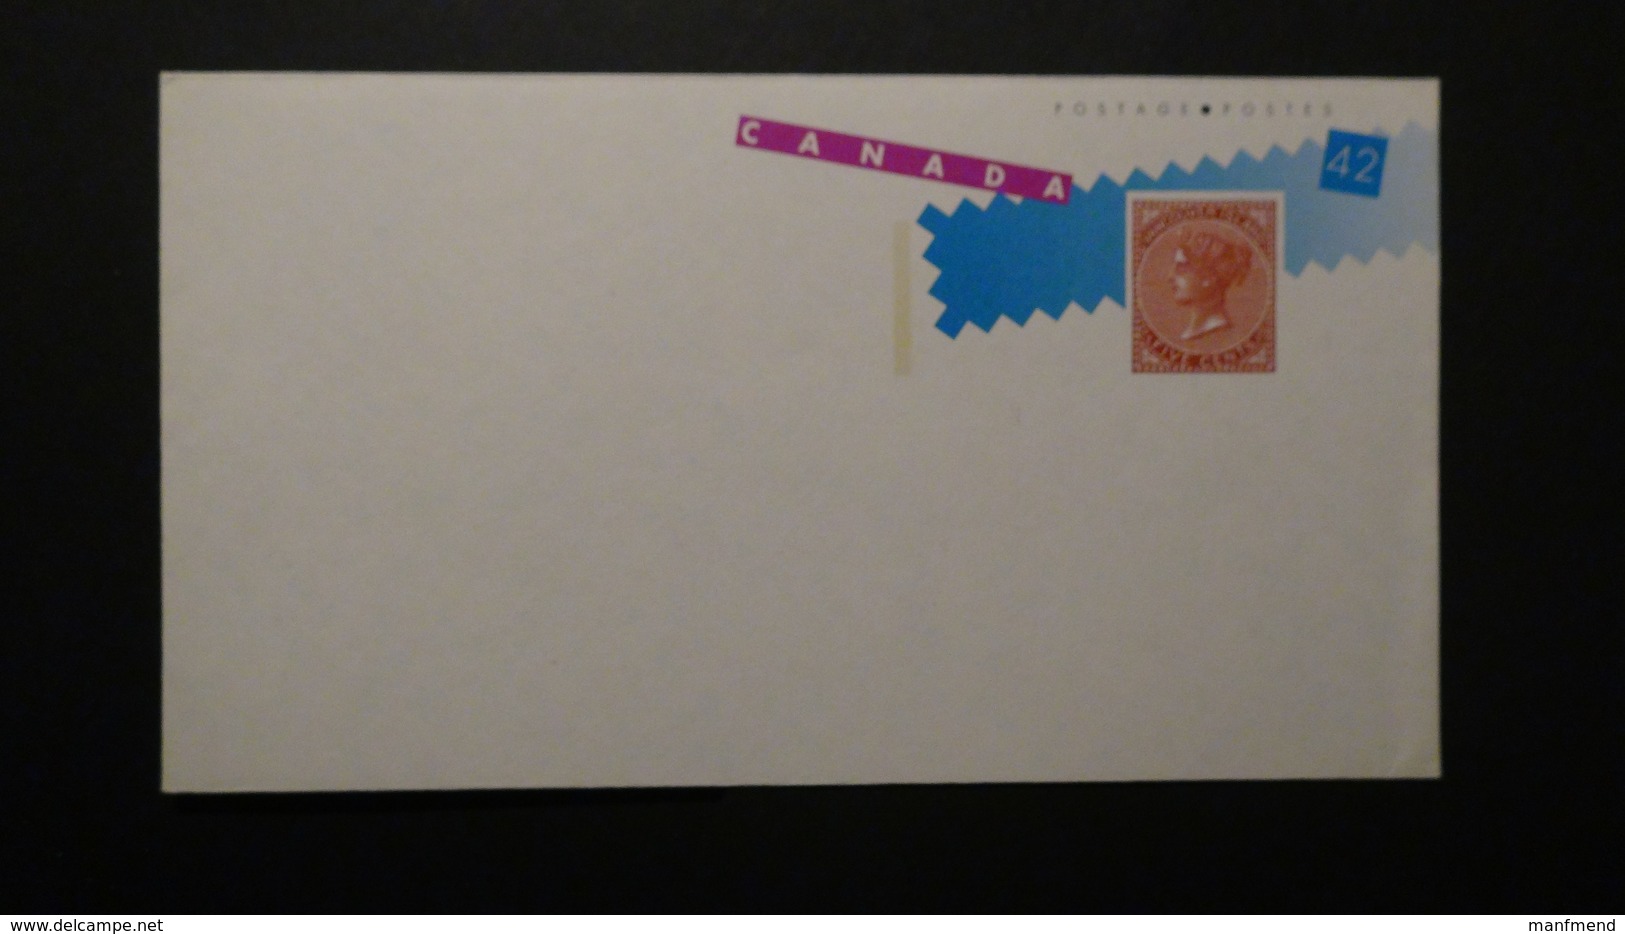 Canada - 42c - 1992 EXPOSITION PHILATELIQUE MONDIAL DE LA JEUNESSE - Envelope - Postal Stationery - Look Scan - 1953-.... Reinado De Elizabeth II